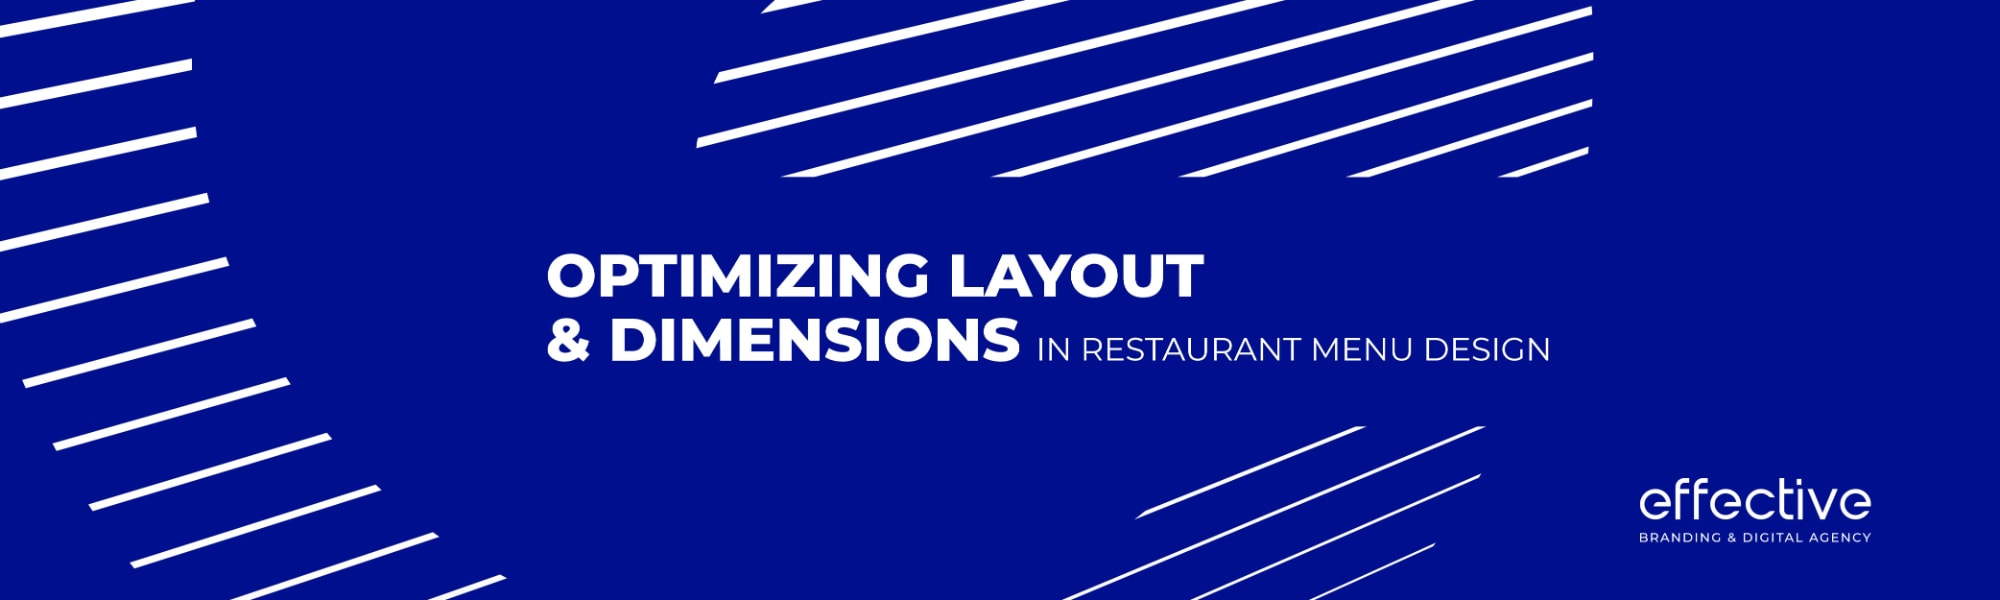 Optimizing Layout and Dimensions in Restaurant Menu Design